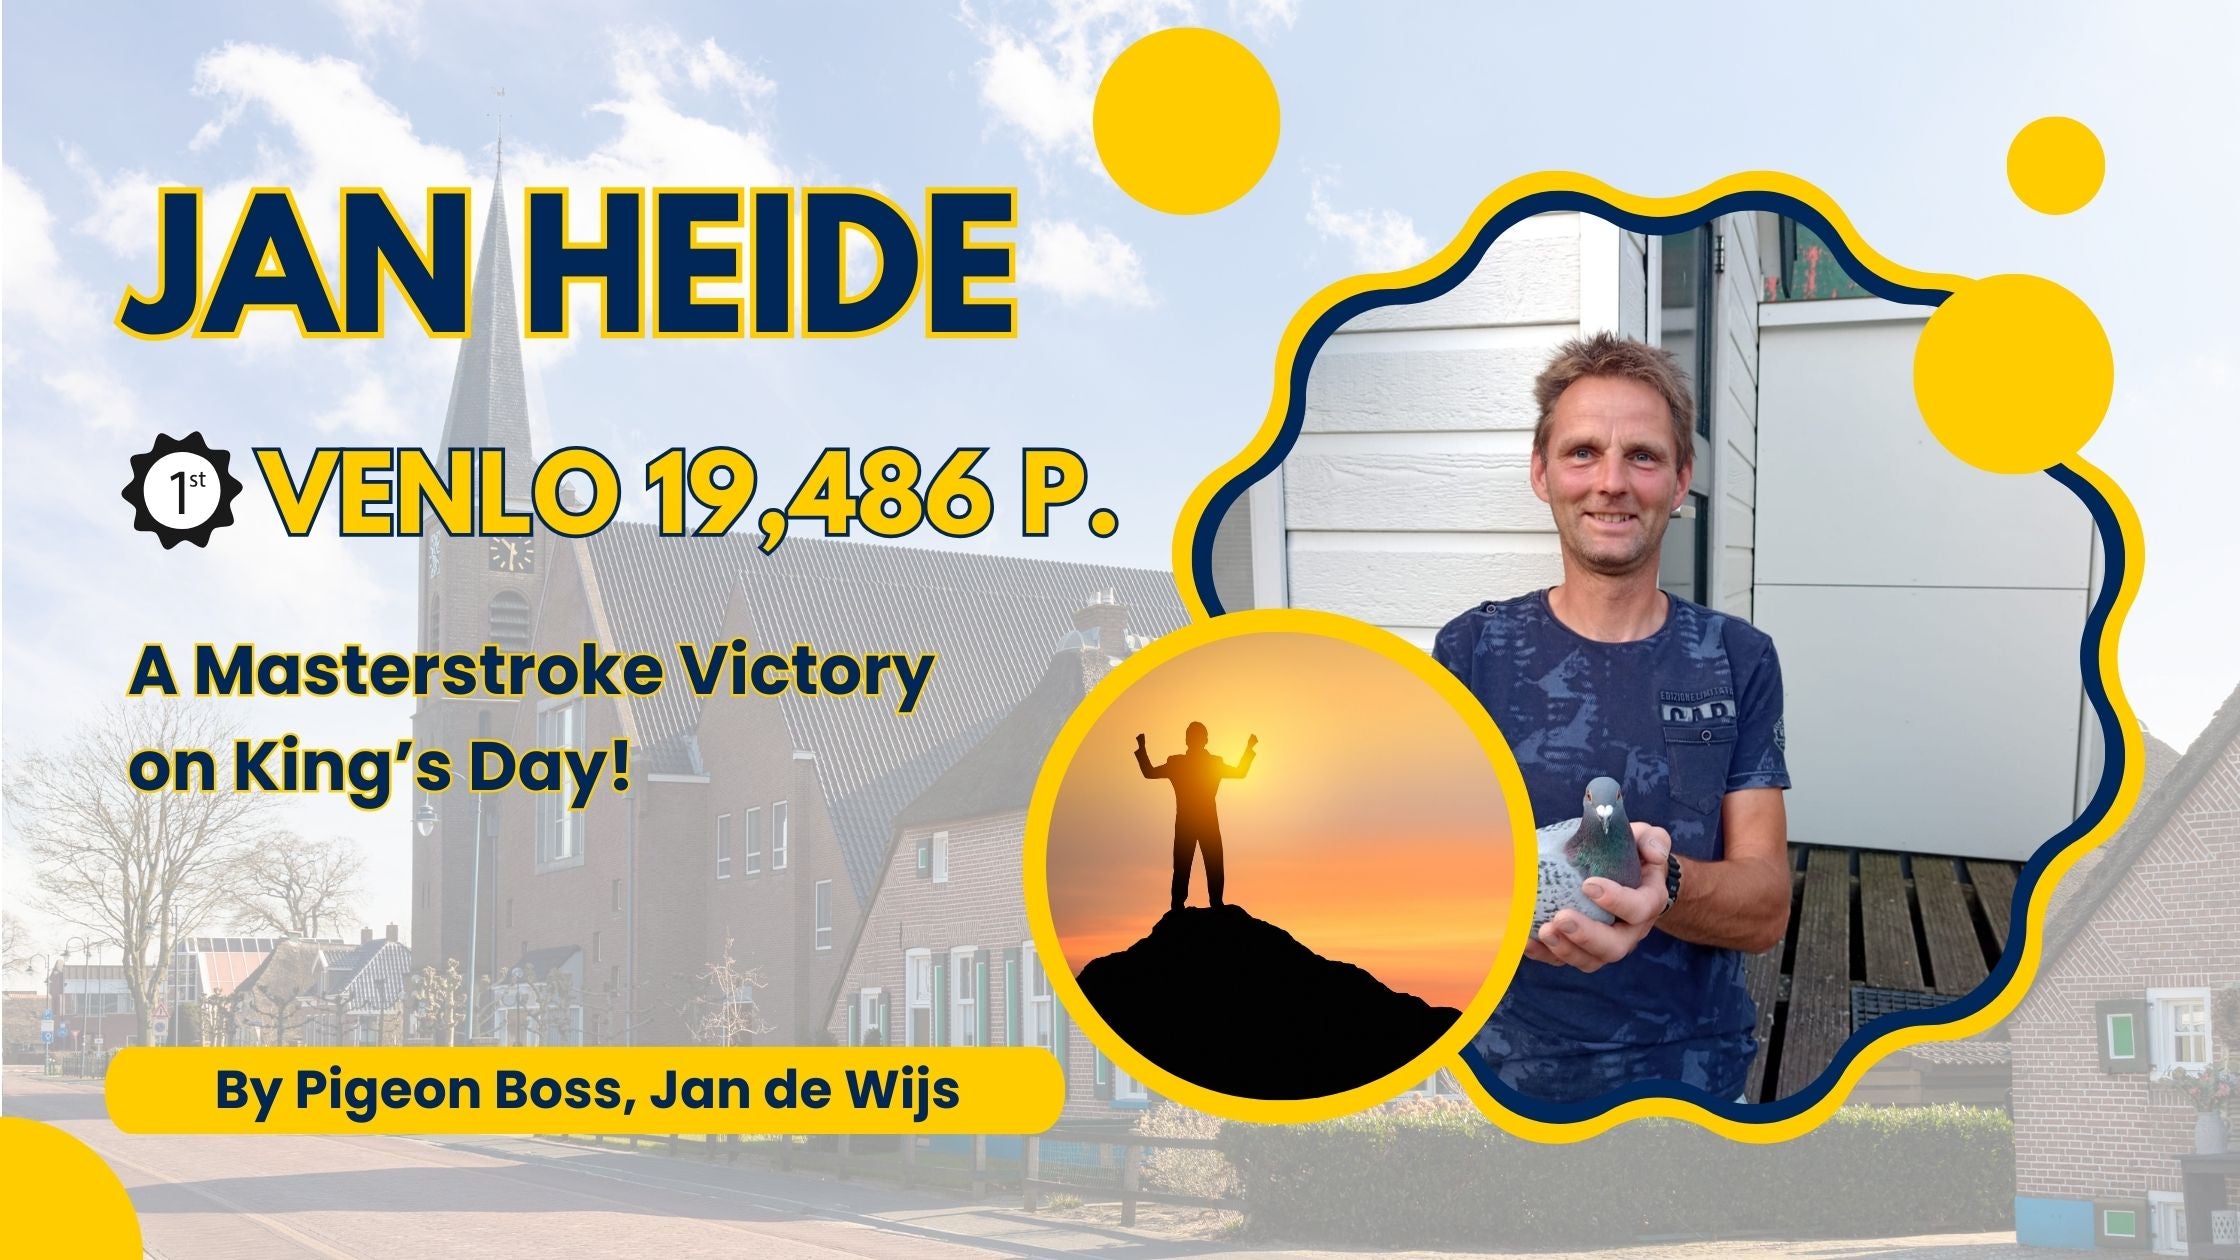 Jan Heide: A Masterstroke Victory on King’s Day!